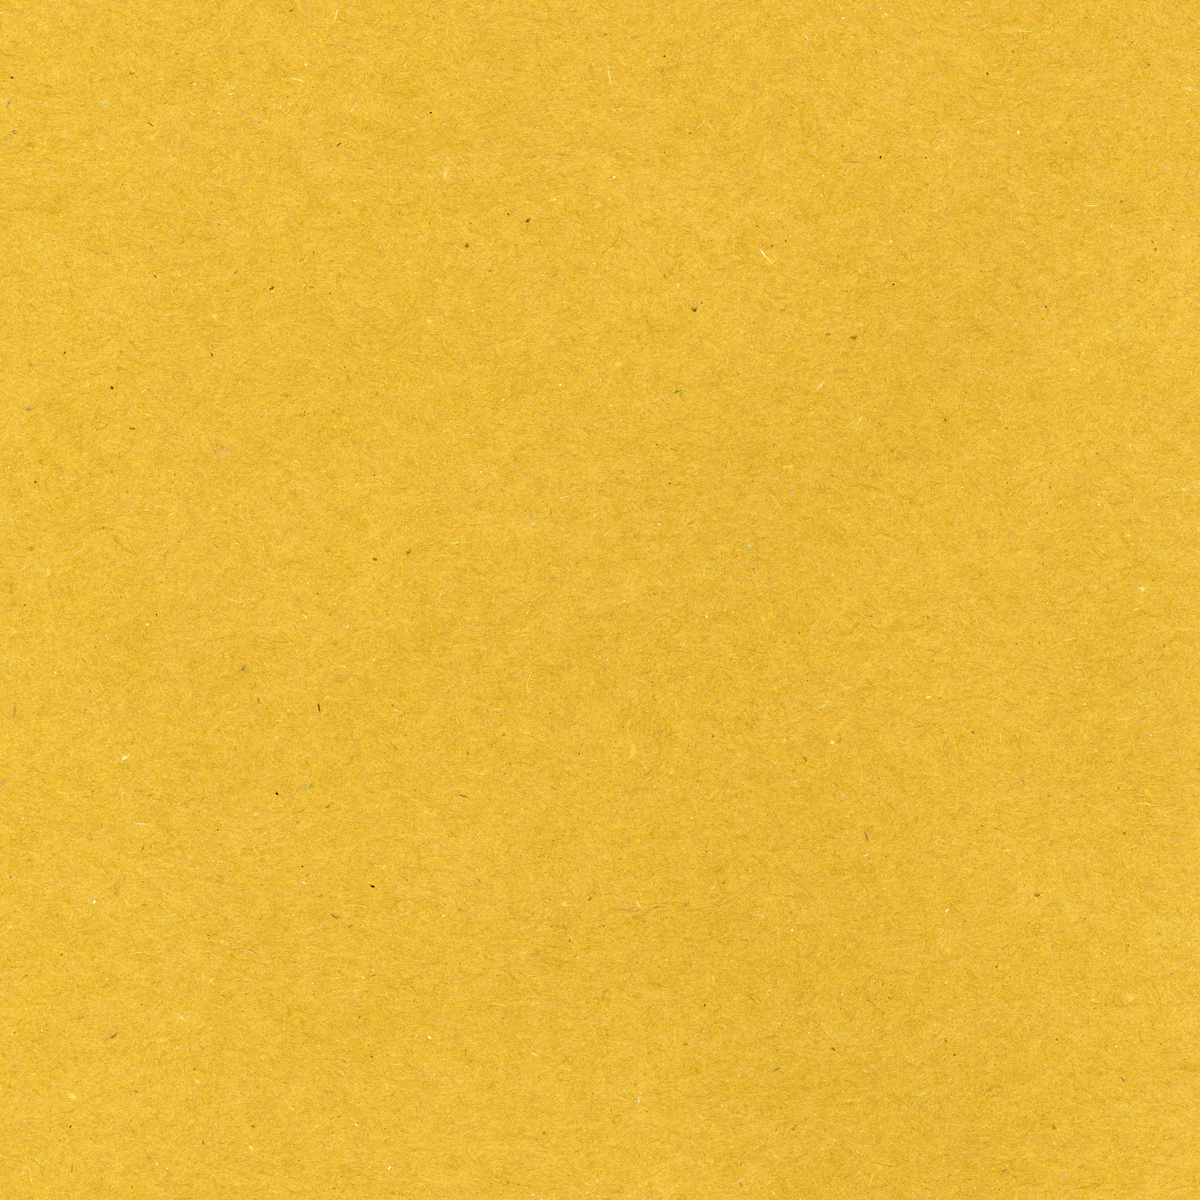 Bright Mustard Yellow Paper Texture Background